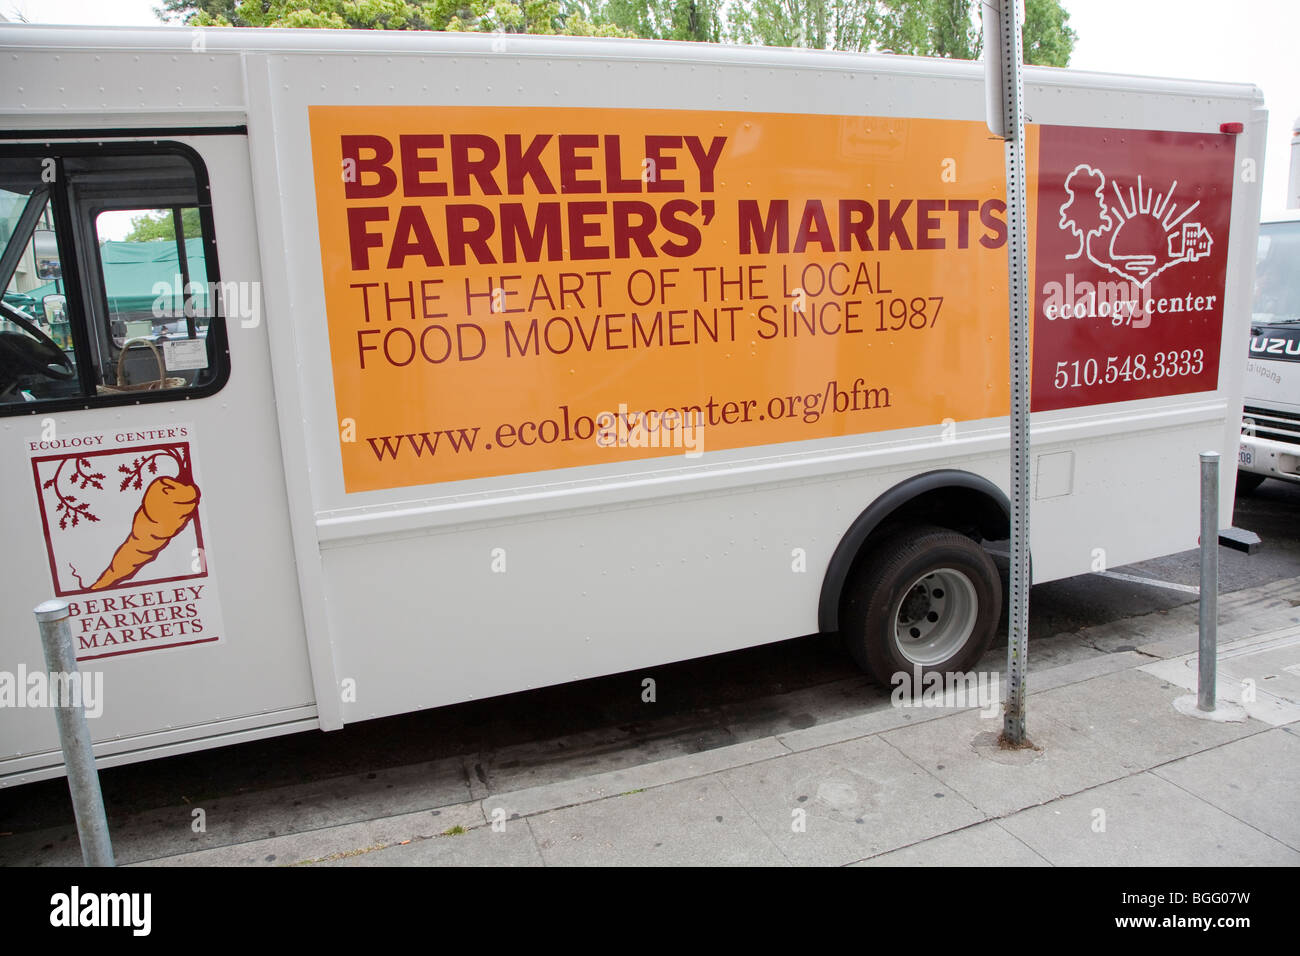 Berkeley Farmers' Market Sign on Side of Truck. Ecology Center's Berkeley Farmers' Market. Berkeley, California, USA Stock Photo